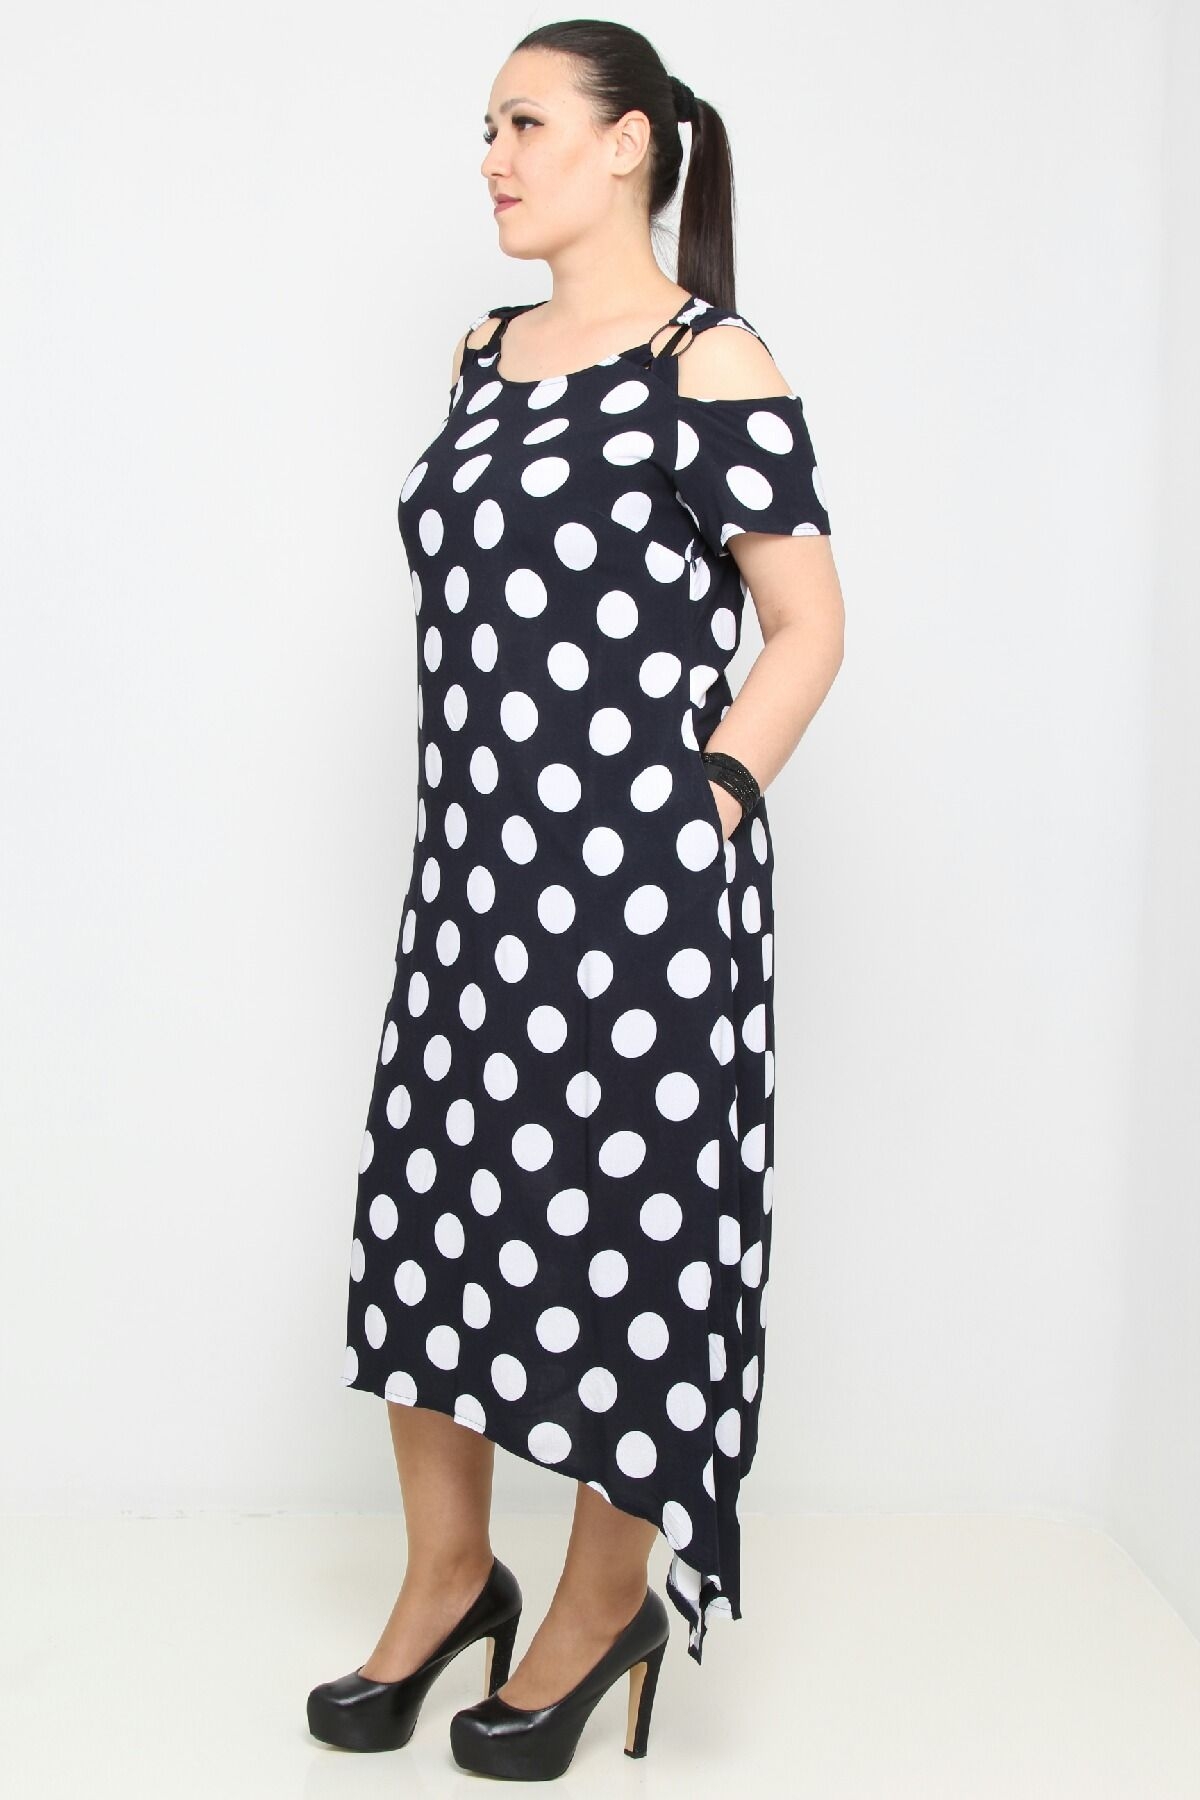 Asymmetrical long polka dot dress with short sleeves and pockets